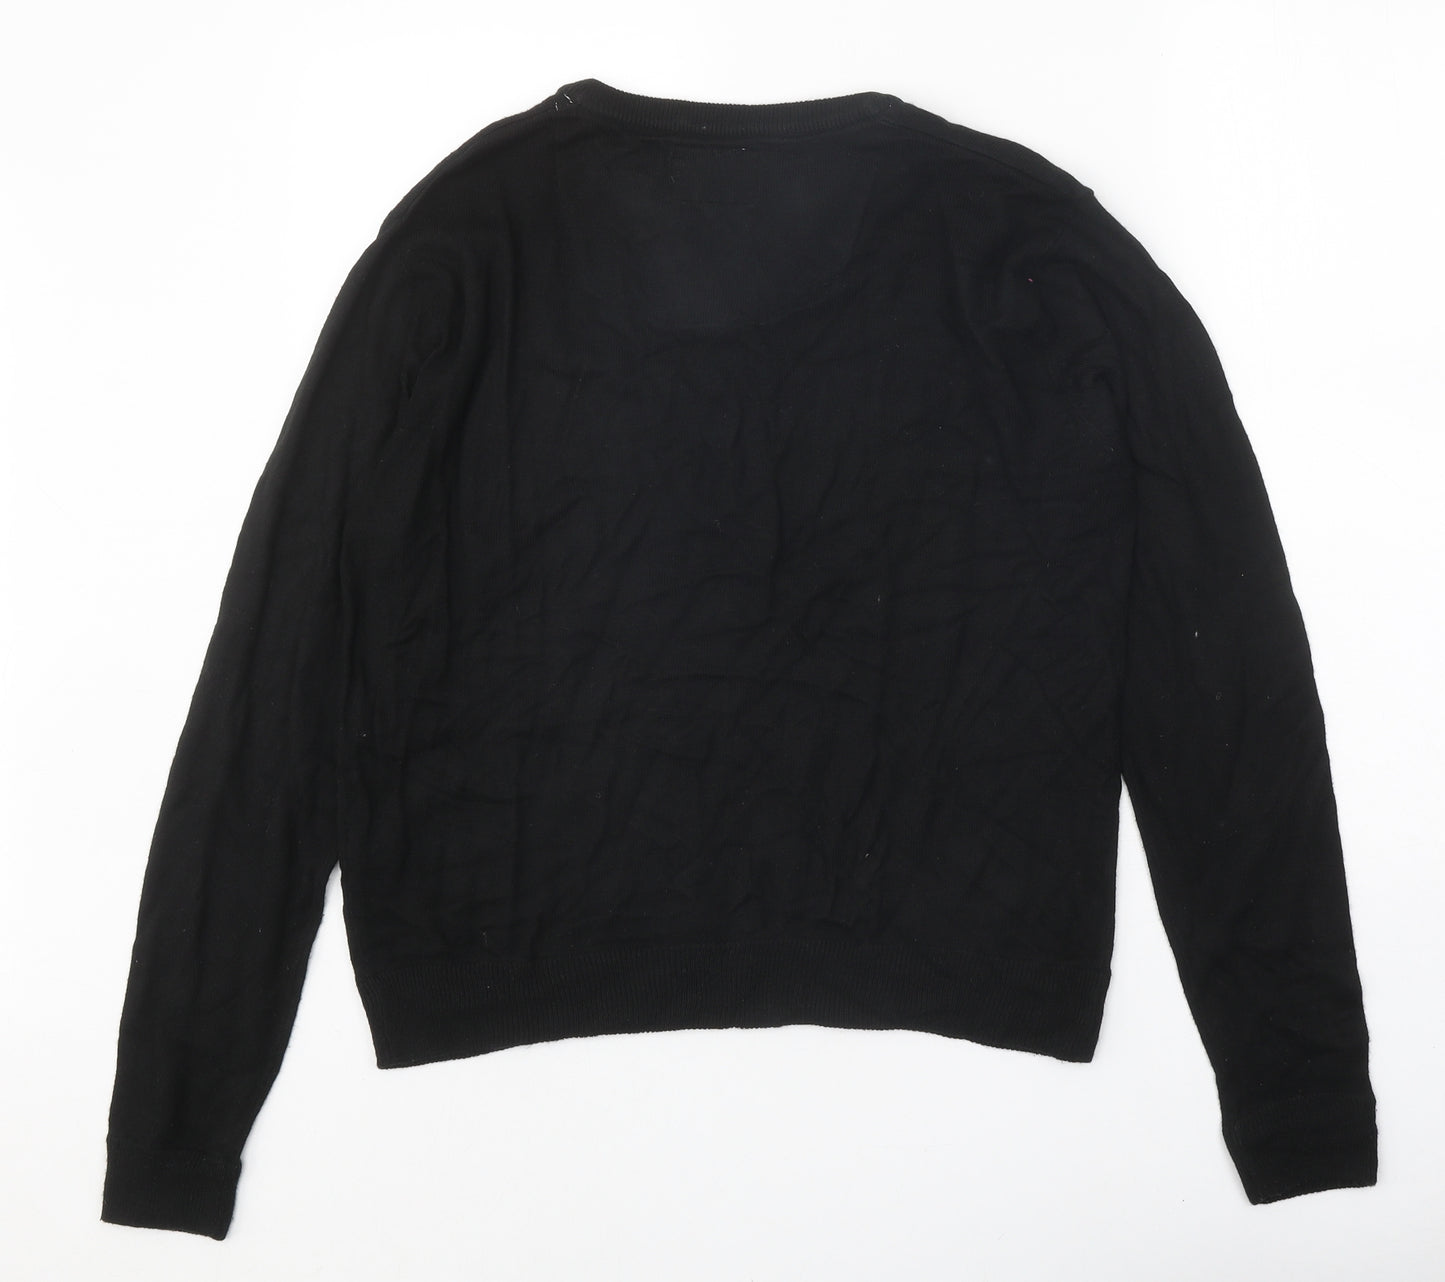 Hutson Harbour Mens Black V-Neck Acrylic Pullover Jumper Size S Long Sleeve